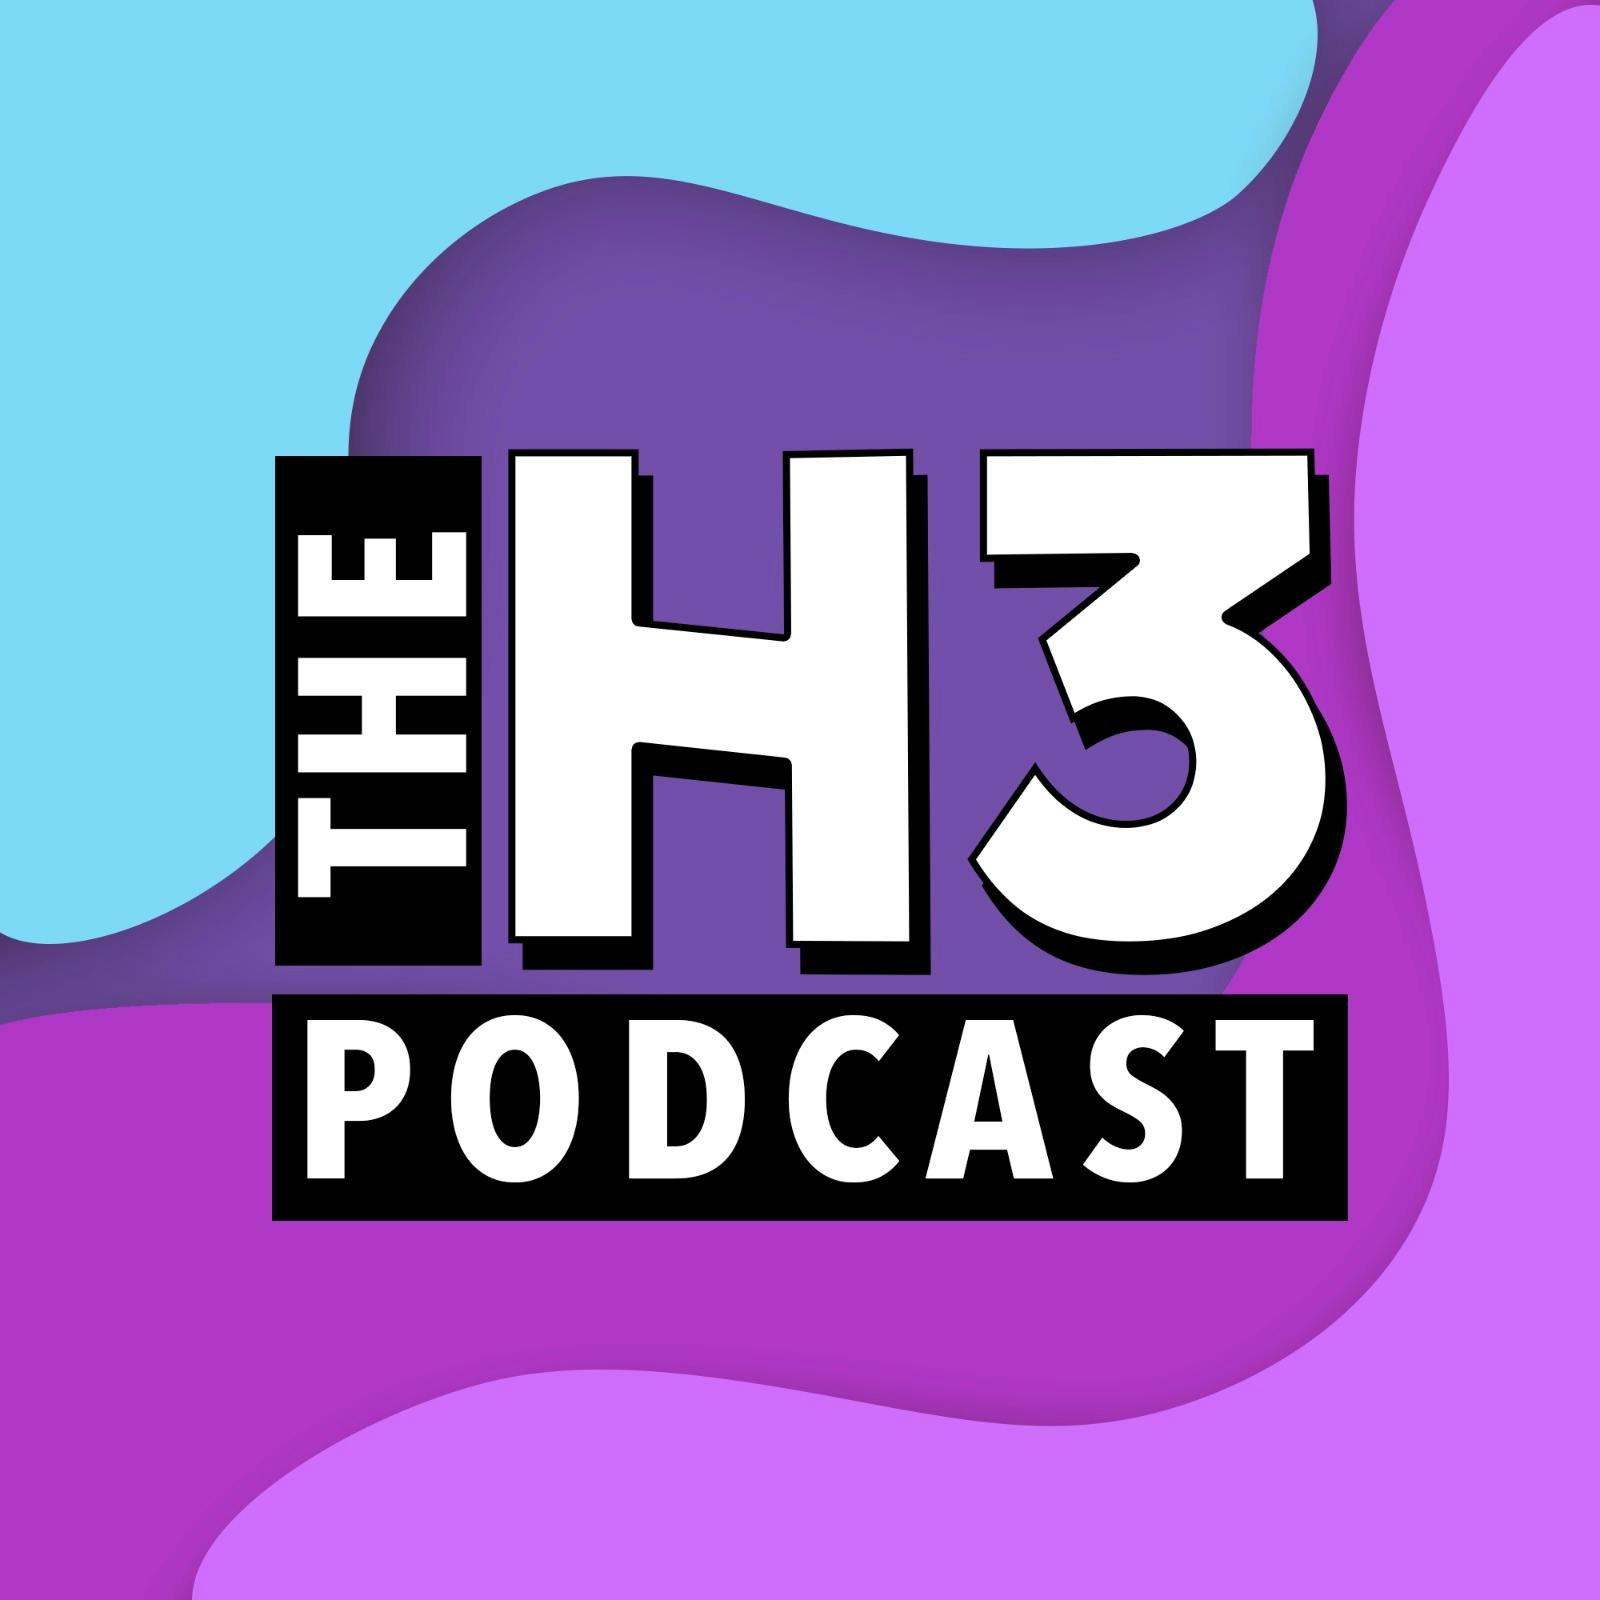 Infowars Attacks Ethan - H3 Podcast # 243